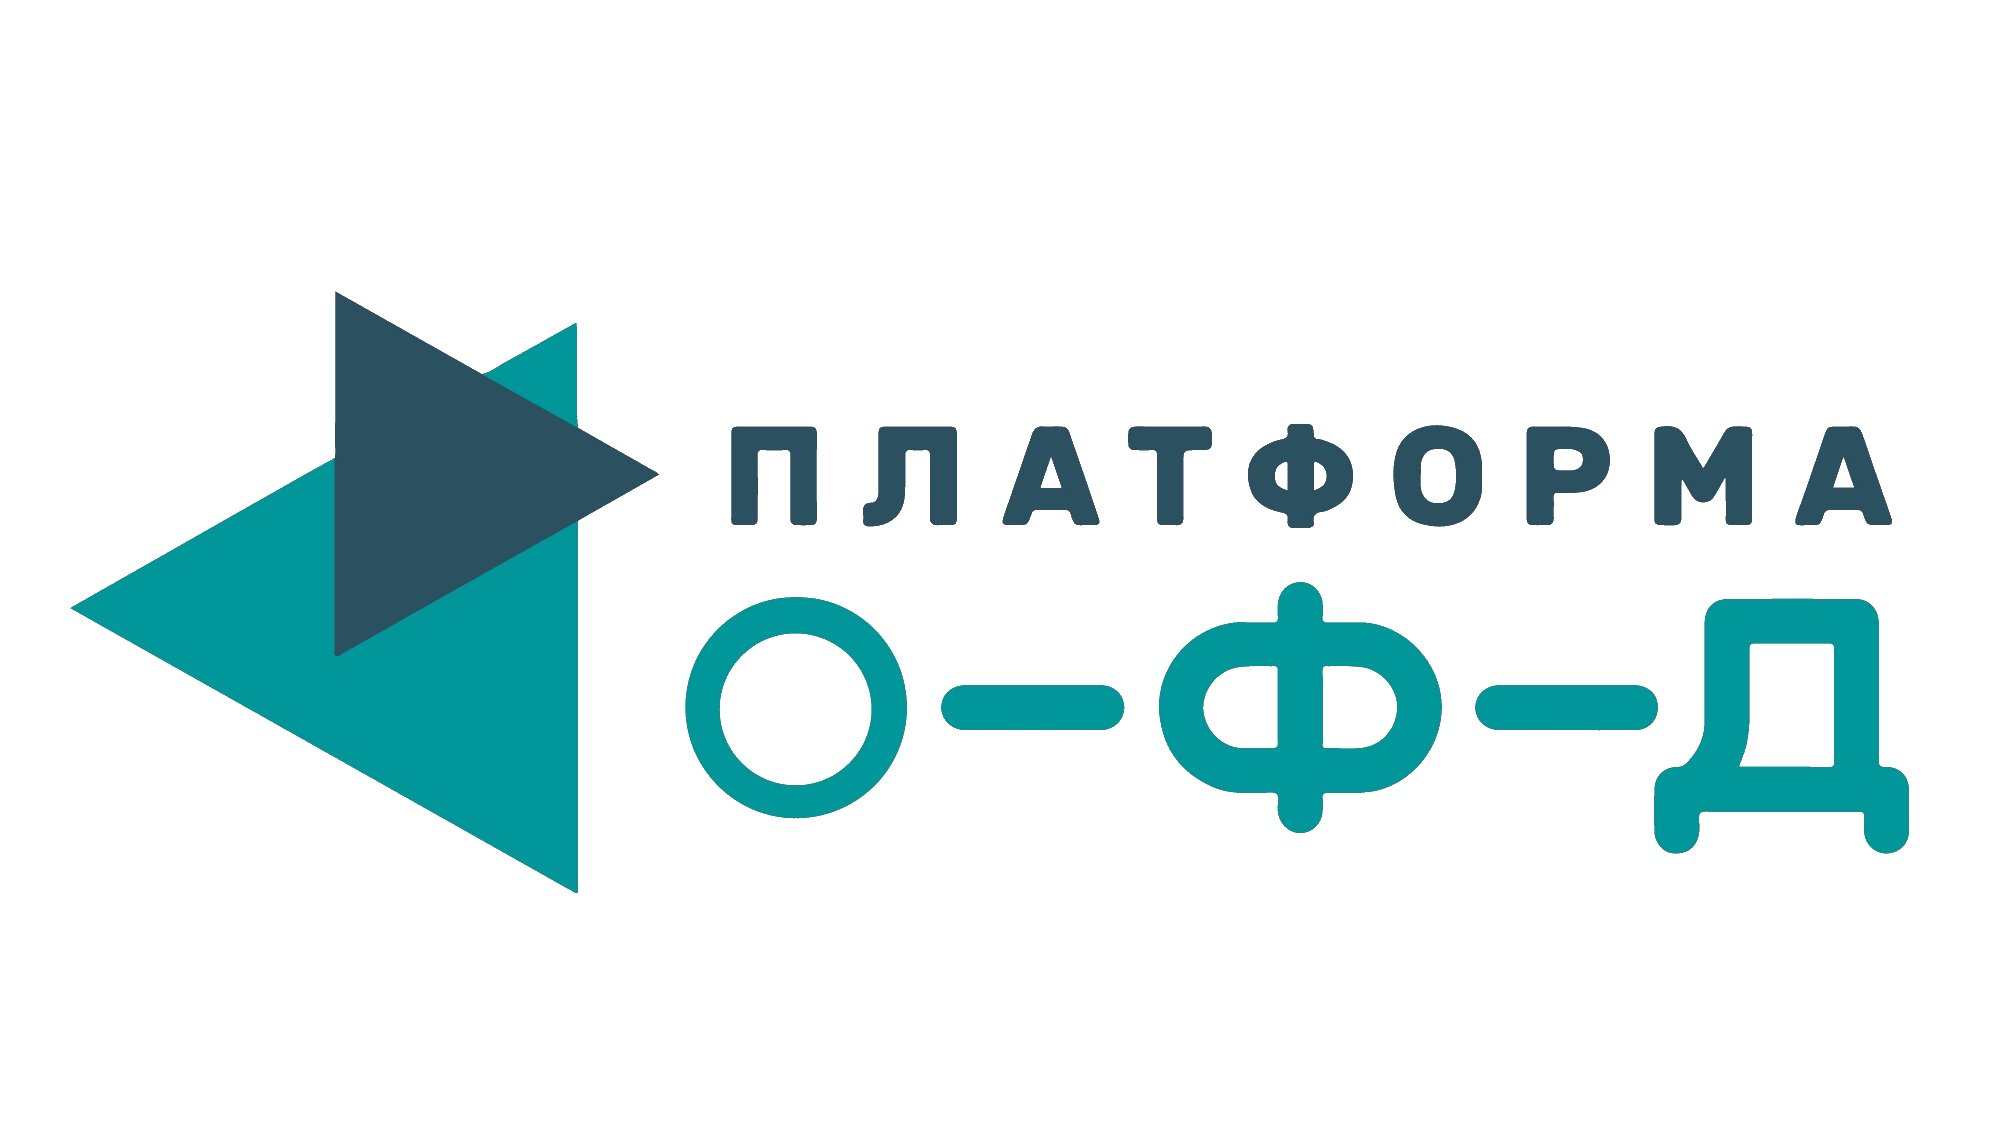 Platformaofd ru web login